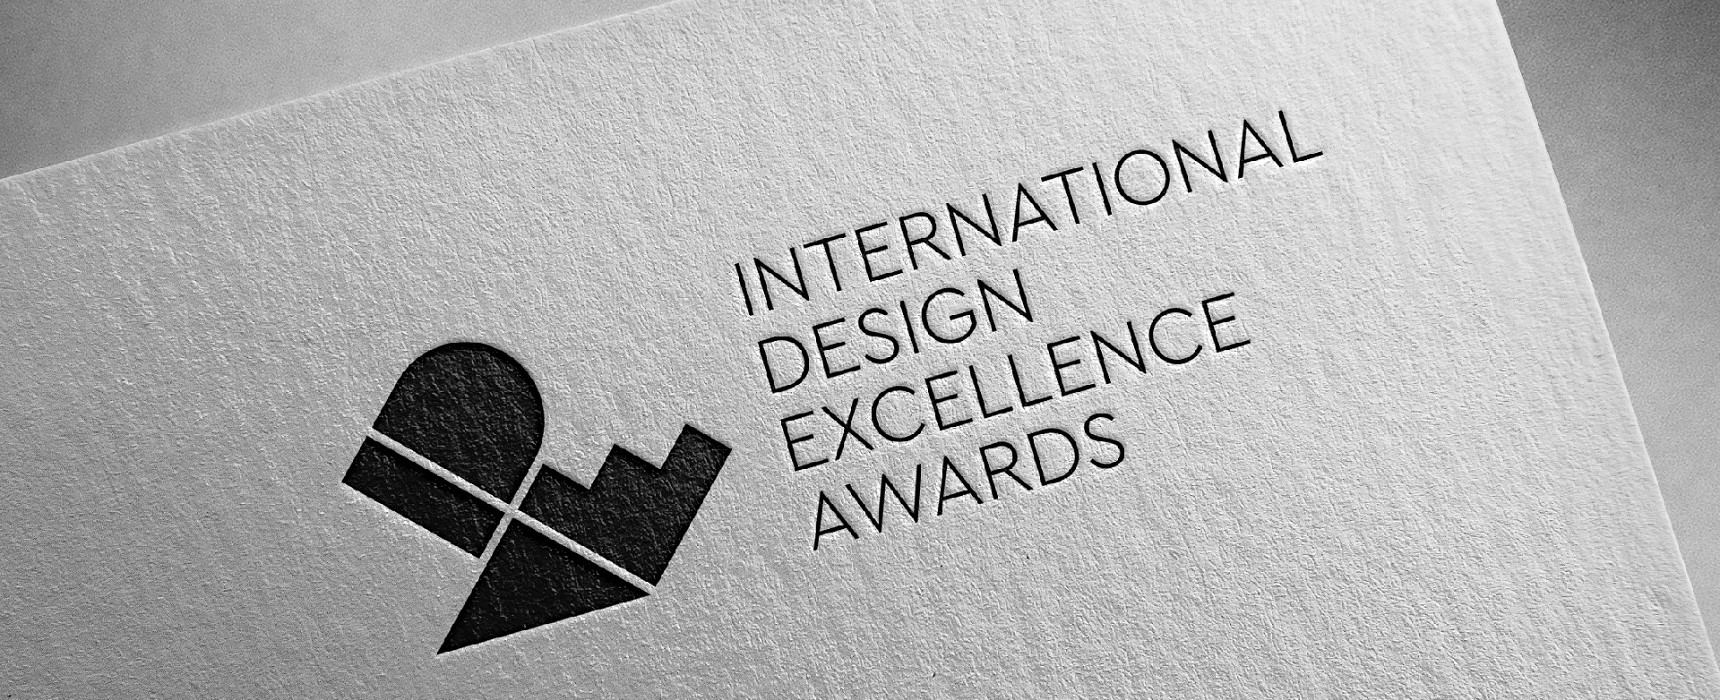 2020 International Design Excellence Awards (IDEA) Winners Revealed